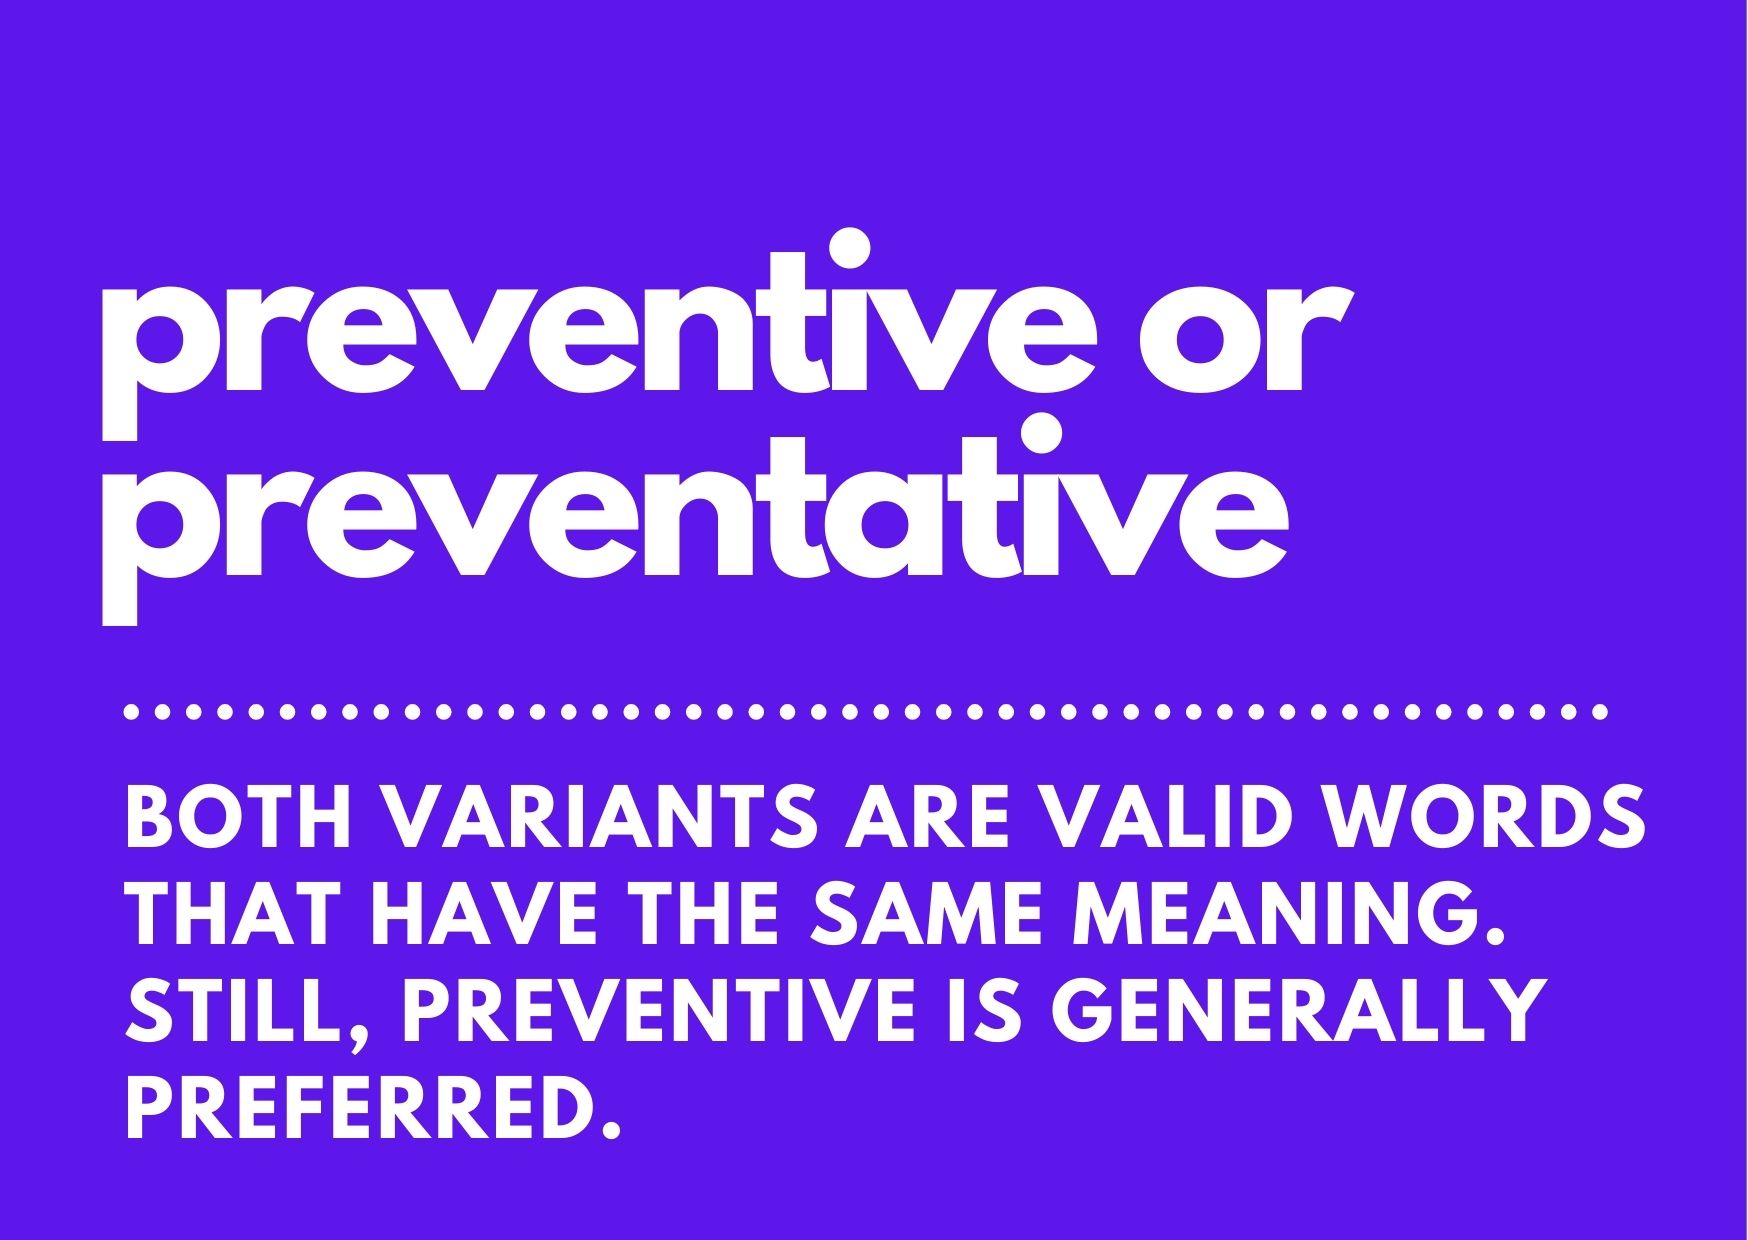 preventive or preventative explanation: both are acceptable with a preference for preventive